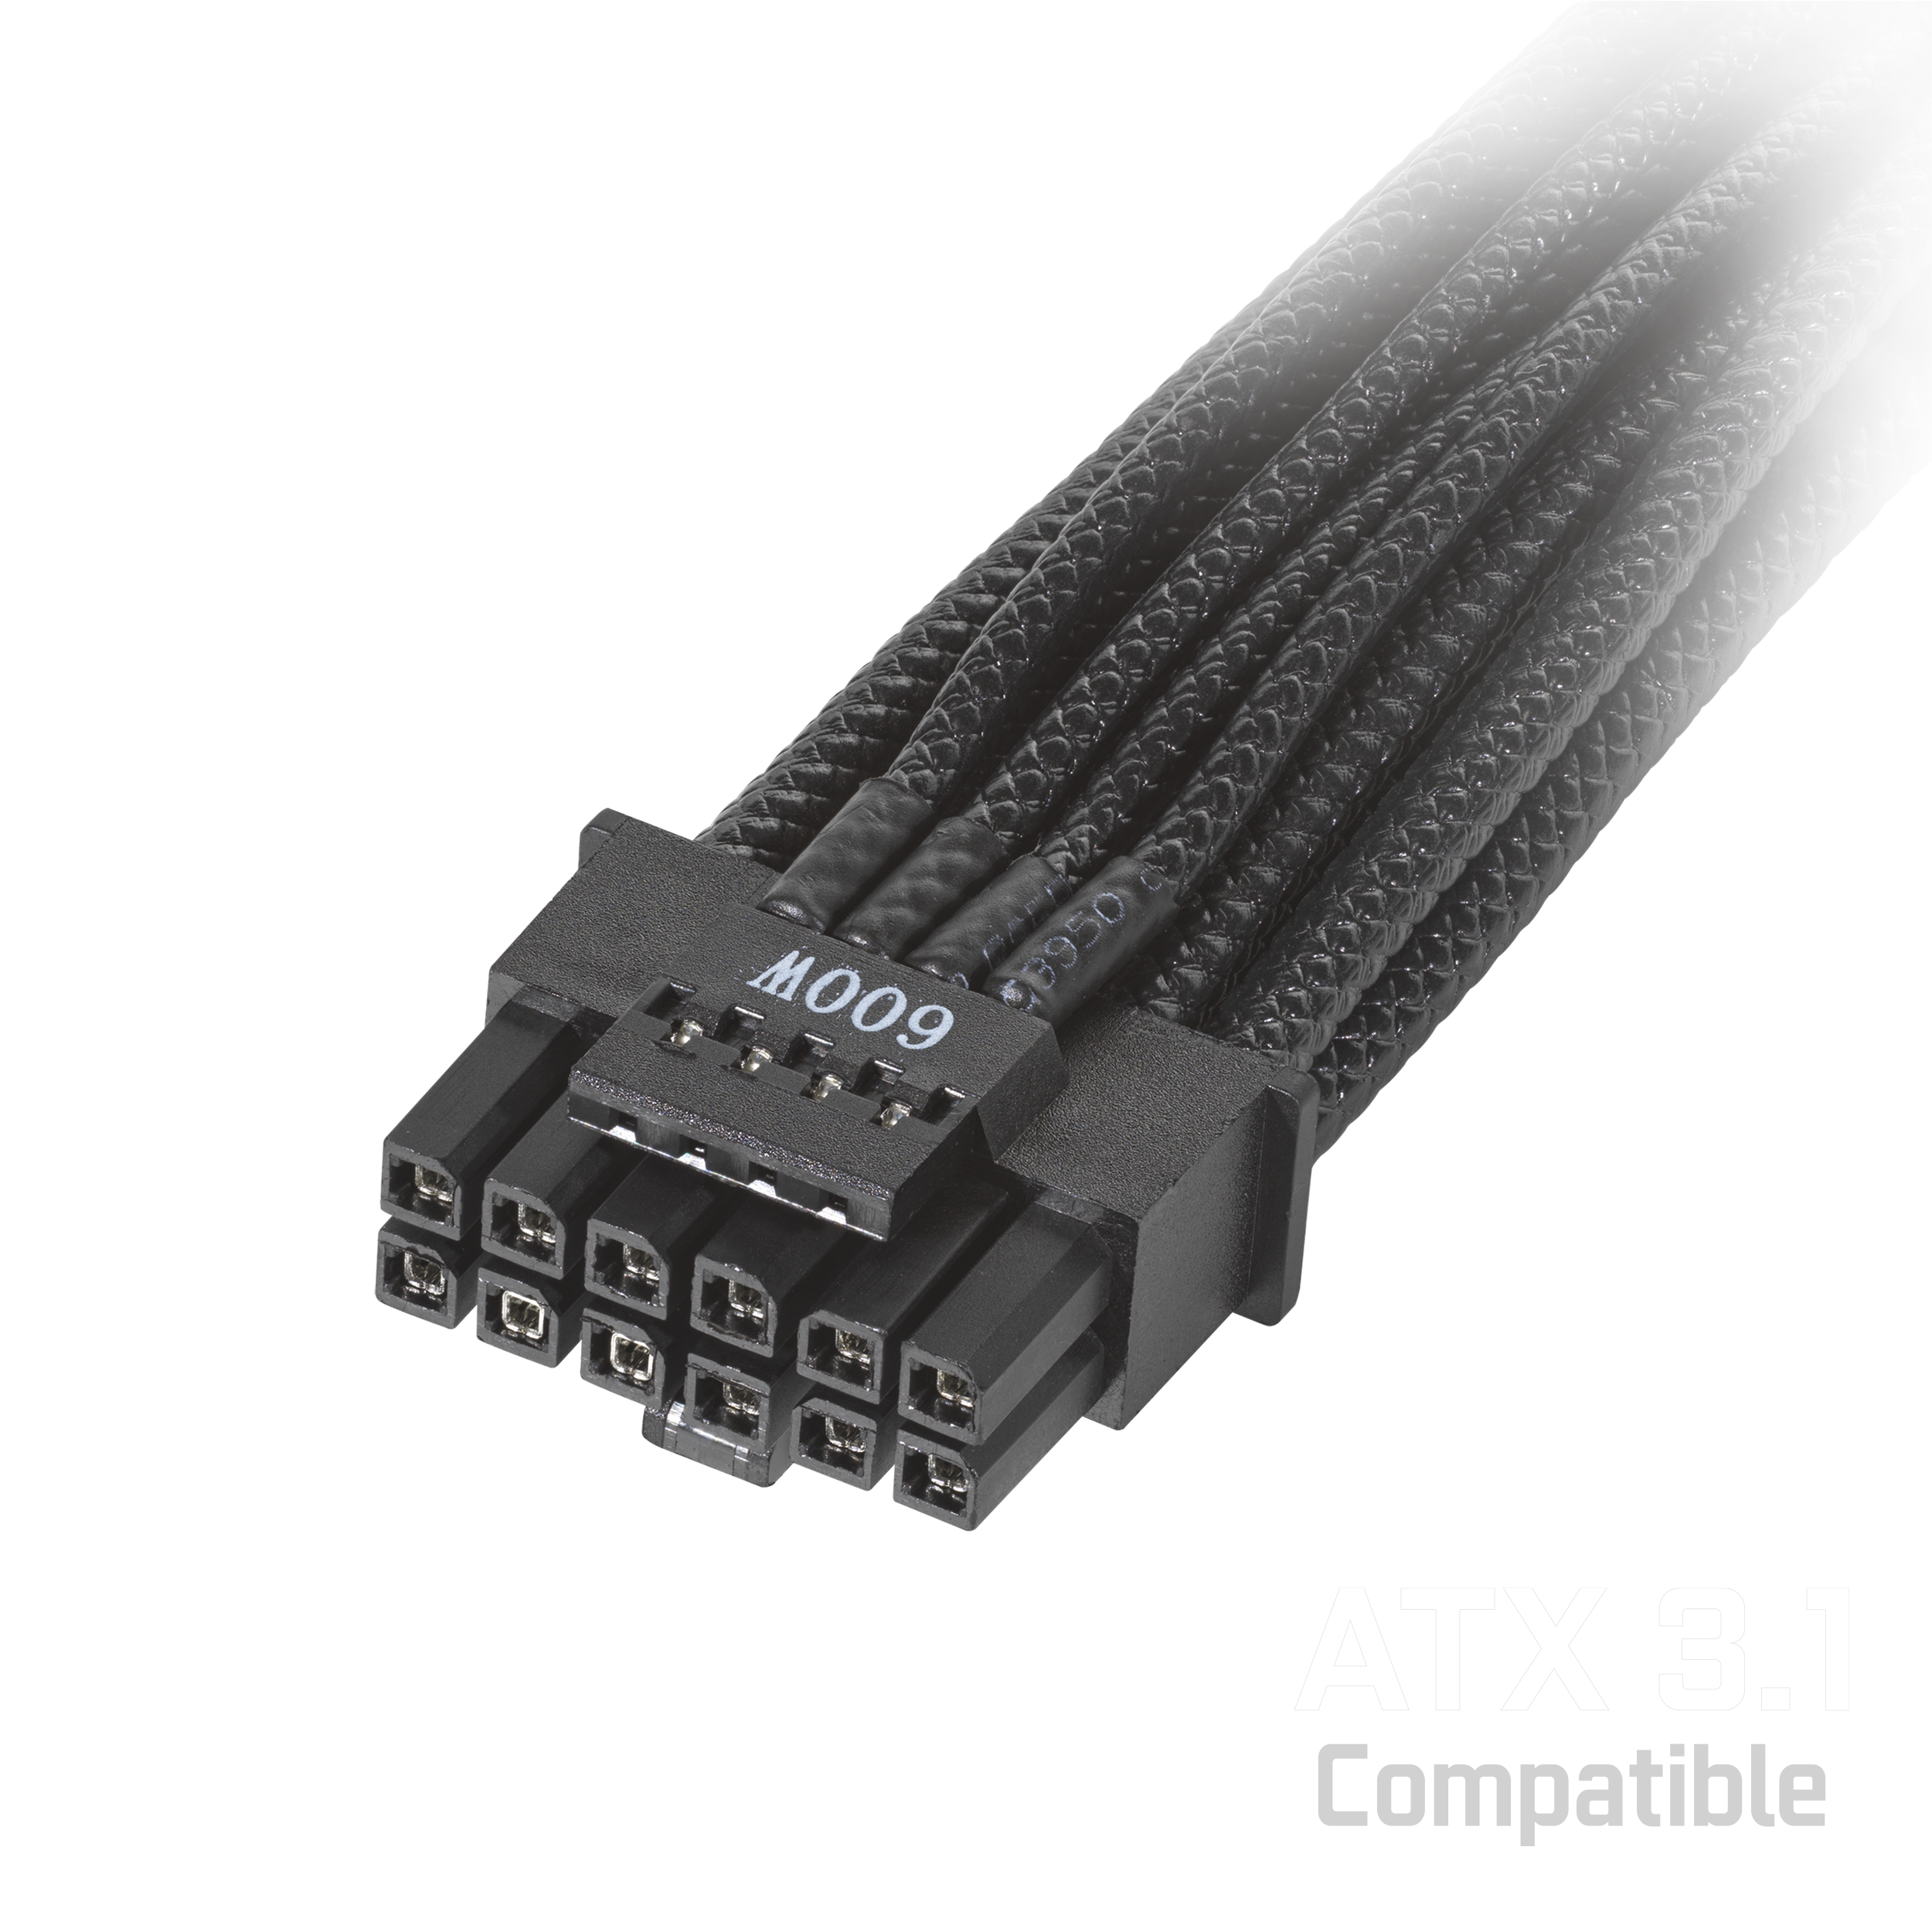 PCIe 5.0 600W 電源線，搭配ATX 3.0相容標誌。